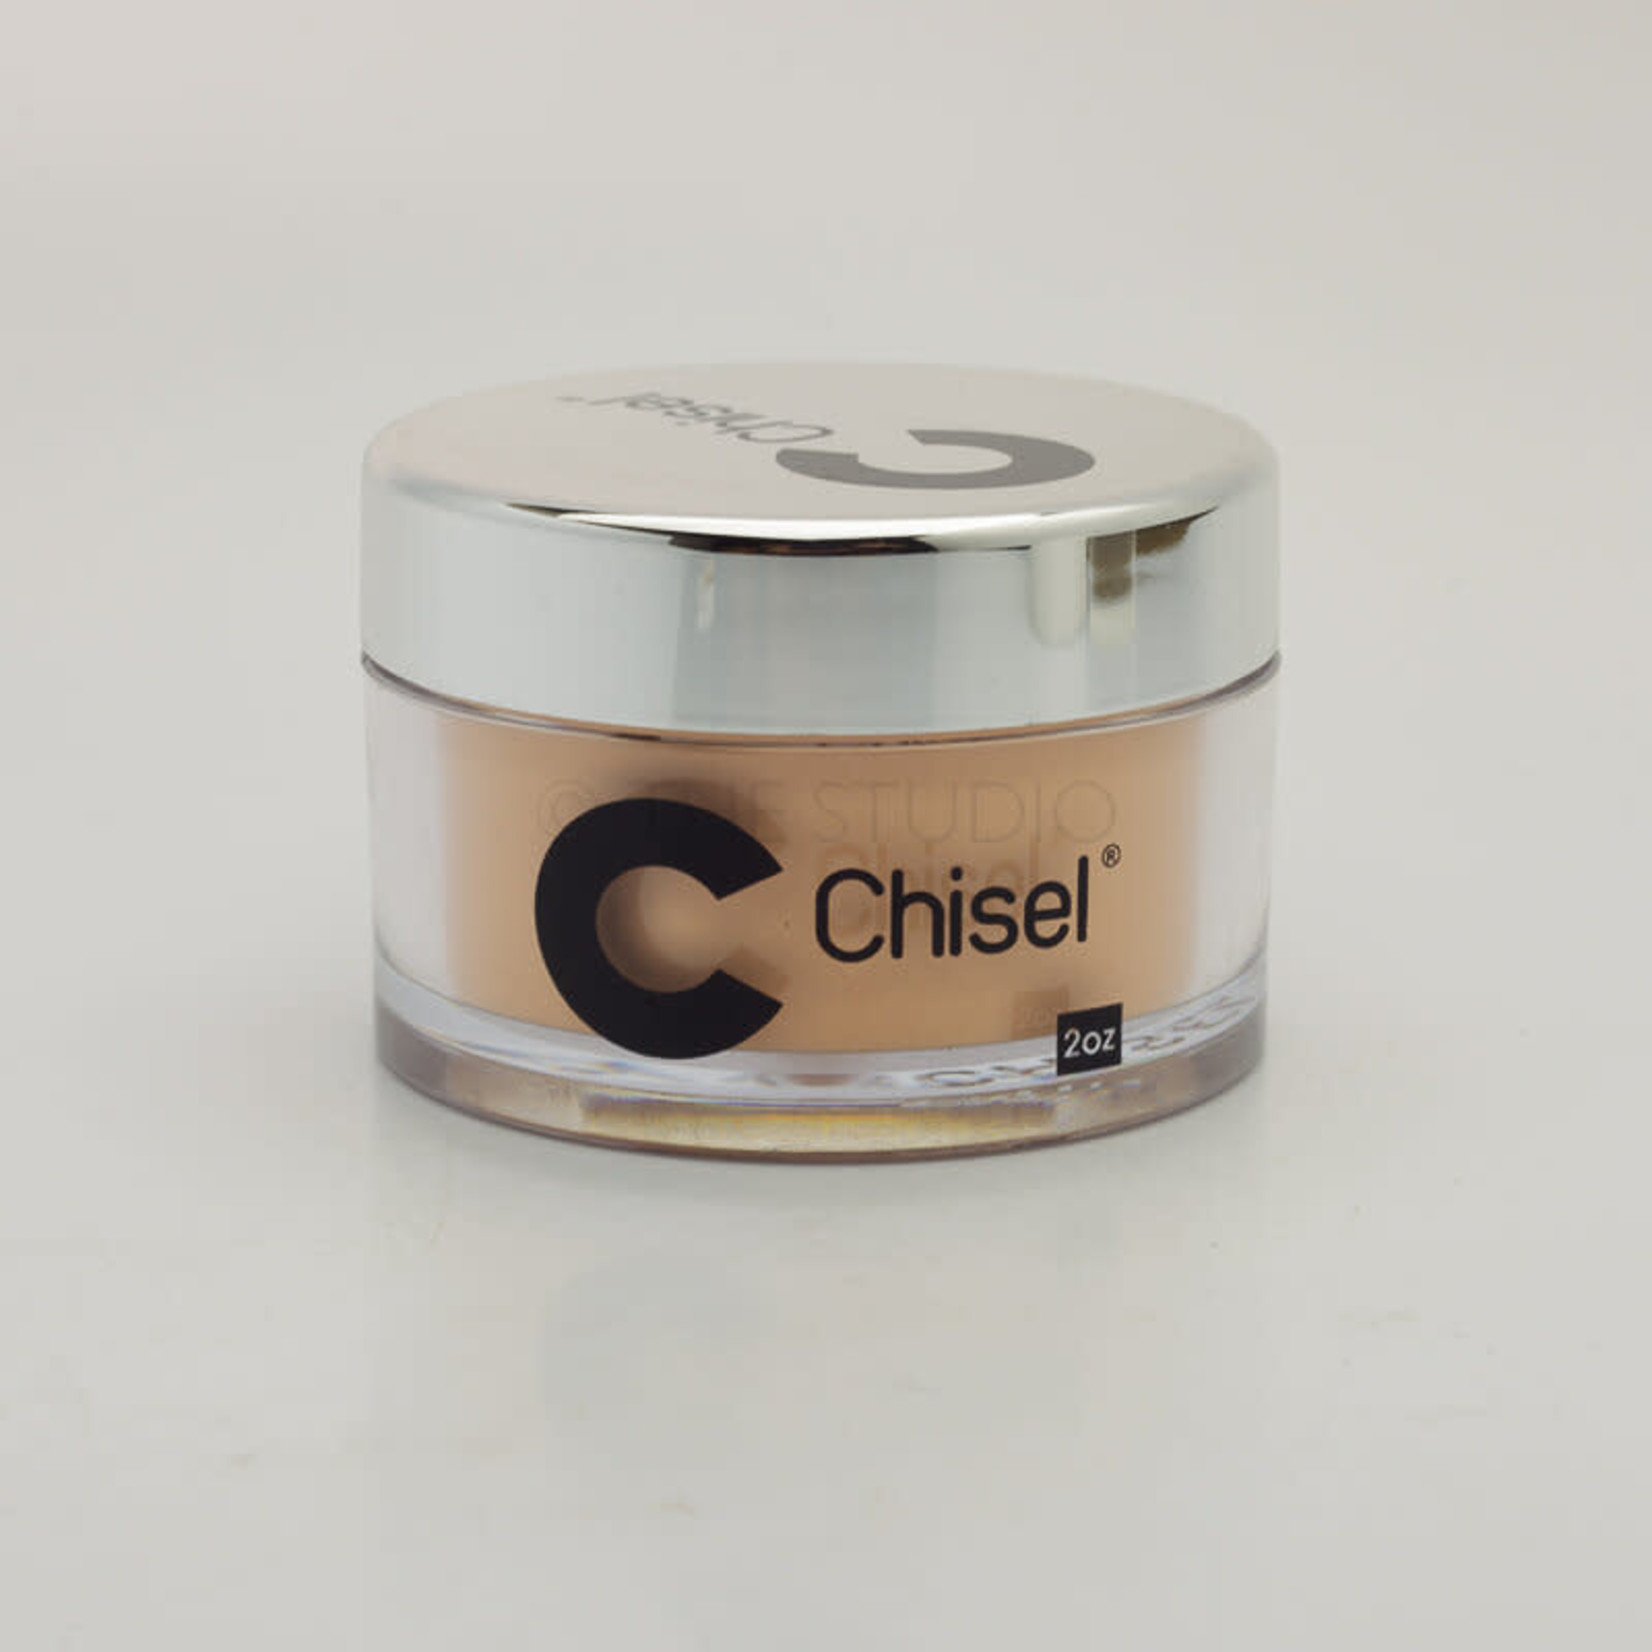 Chisel Chisel - Glow 09 - AIO Powder - 2 oz